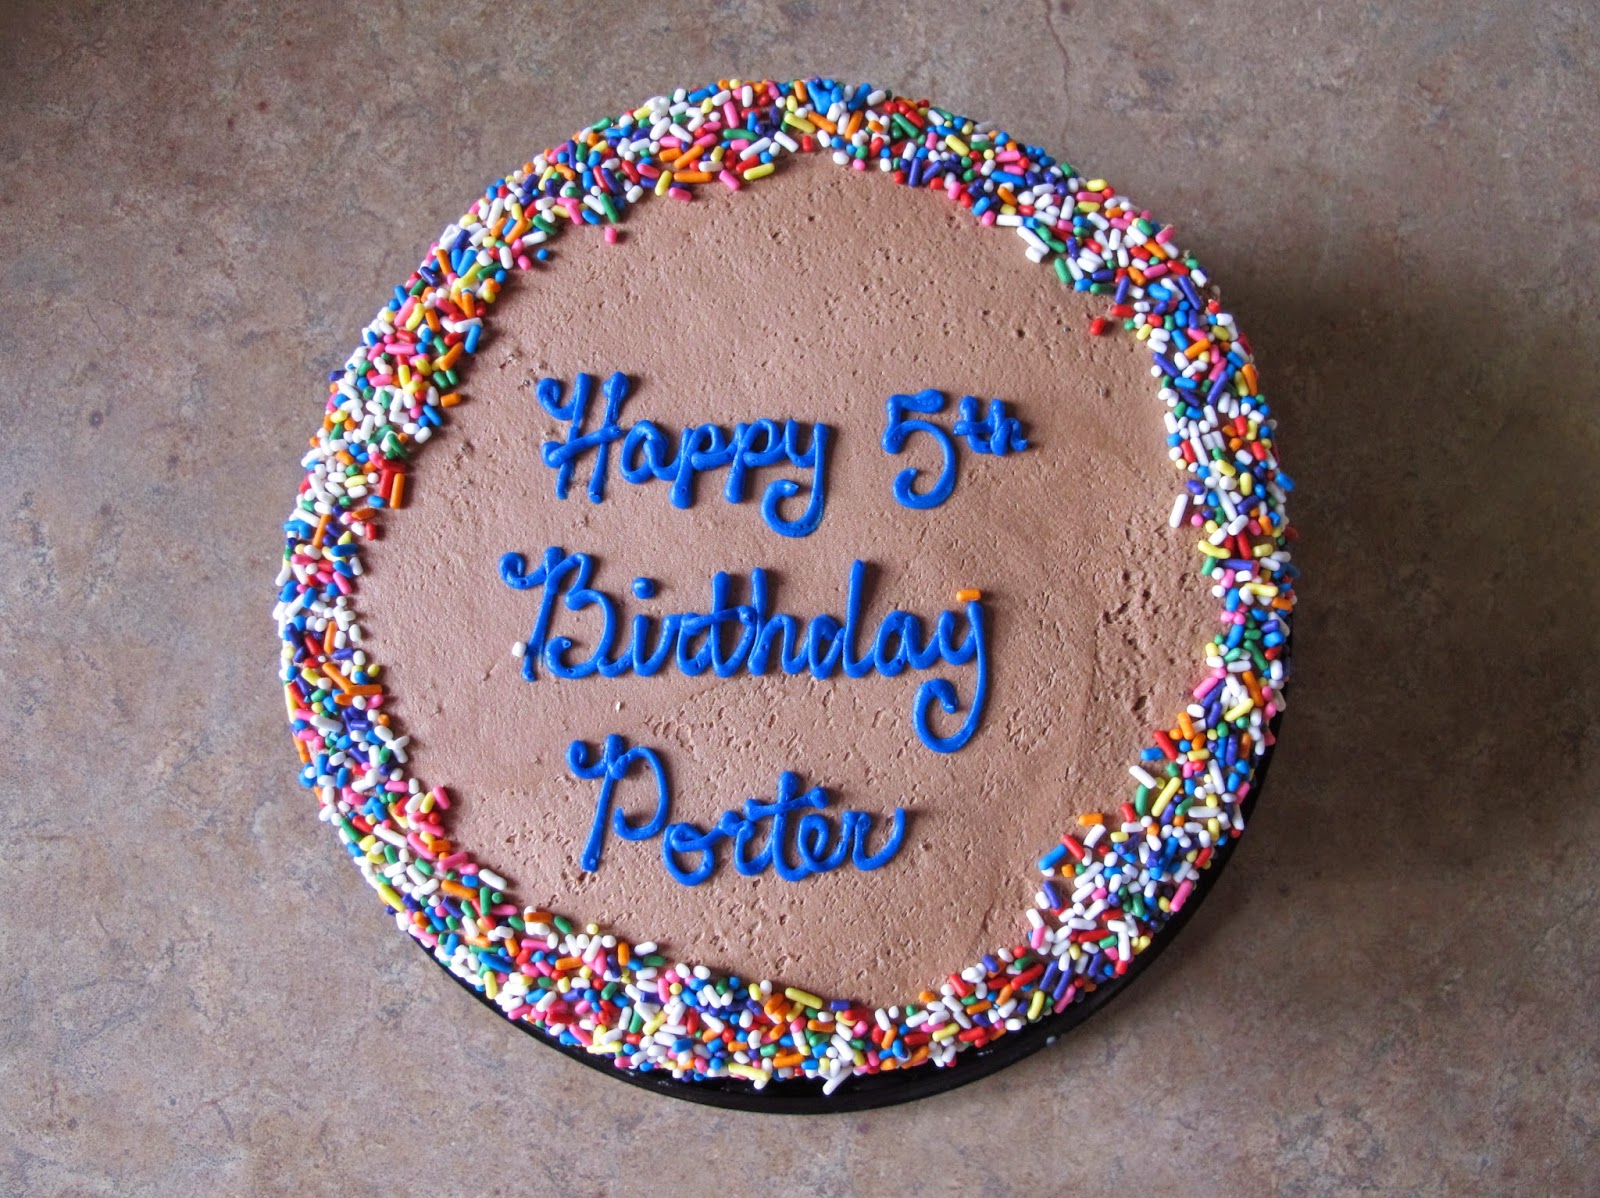 Porter's 5th Birthday Cake